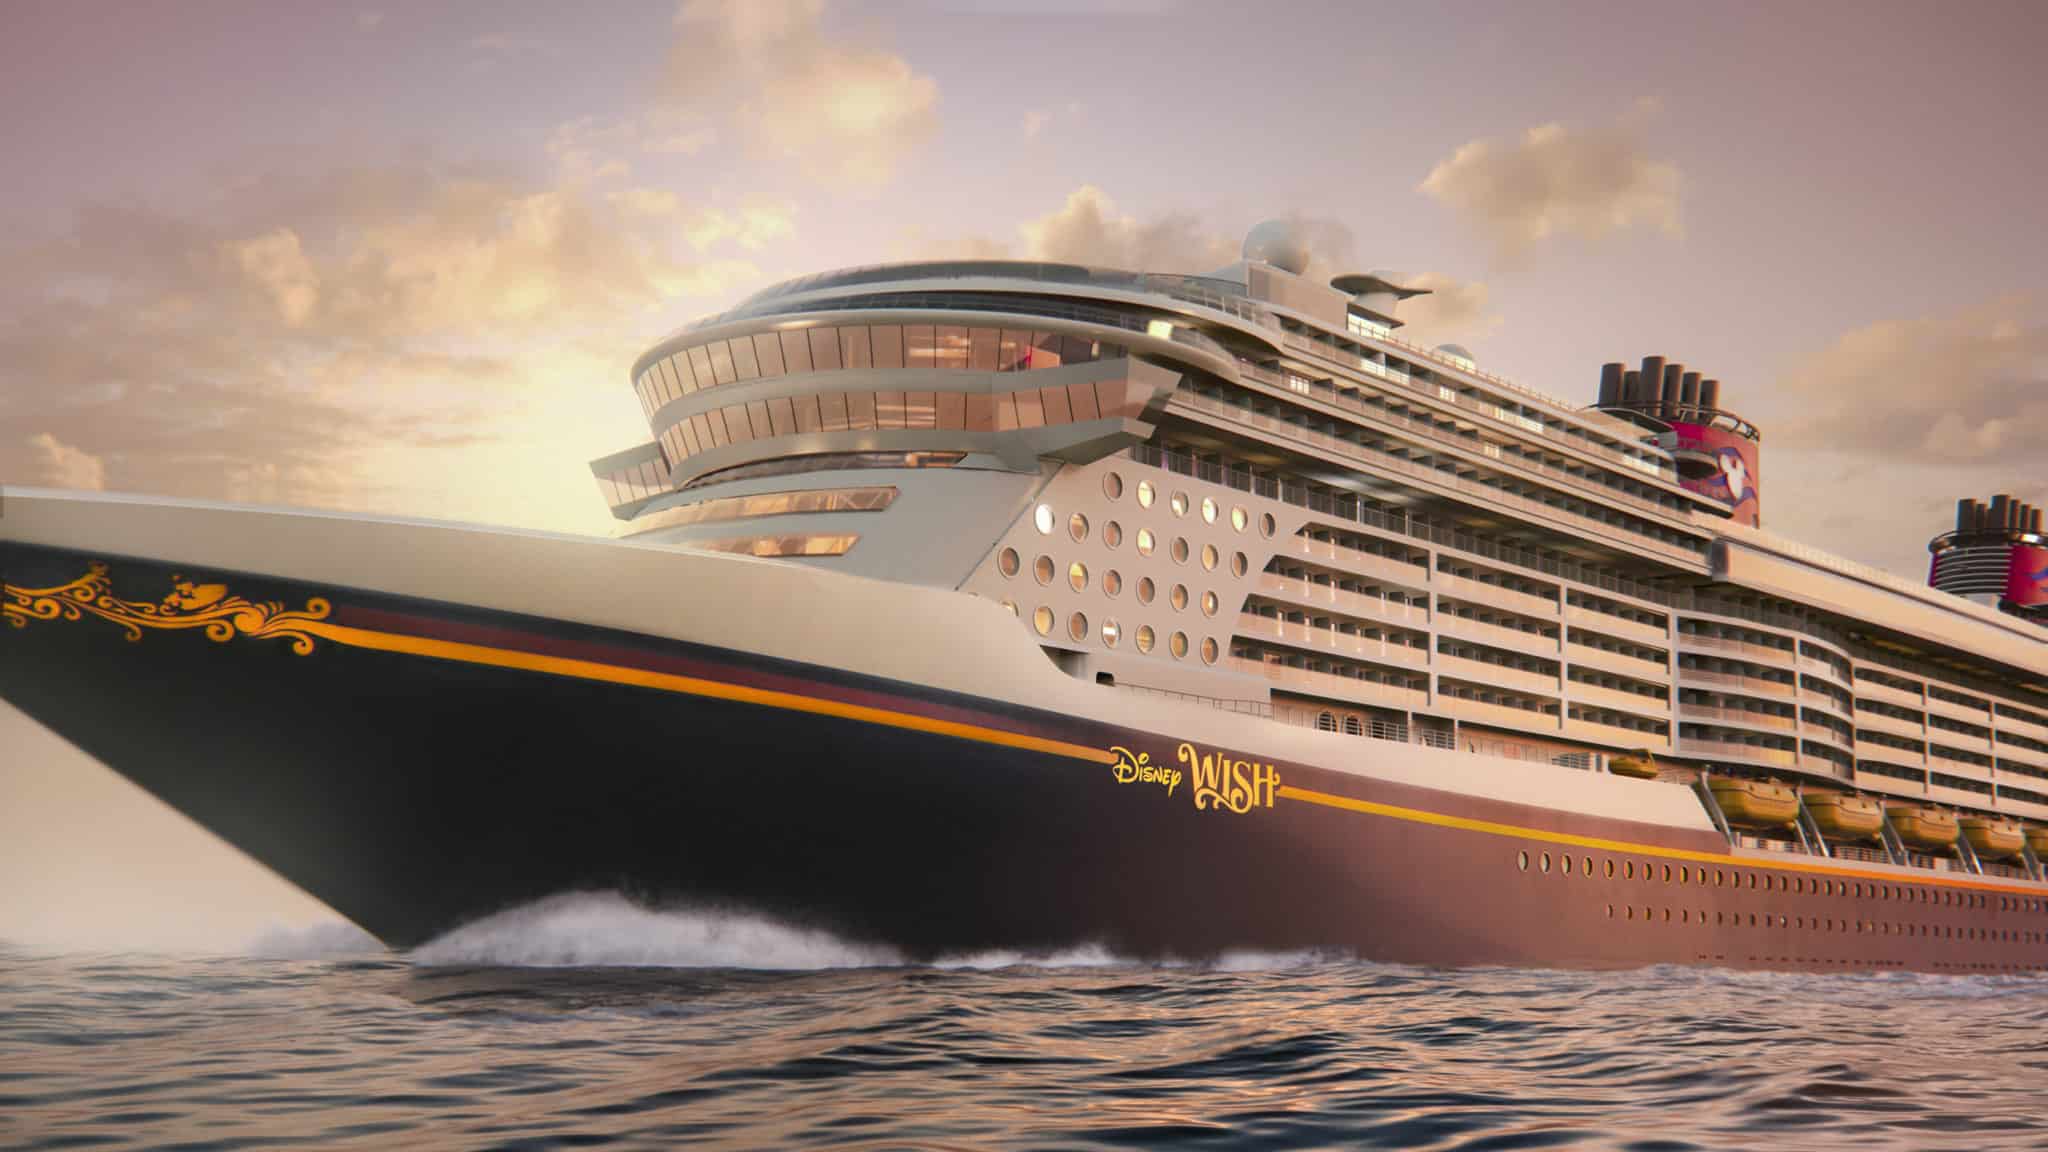 Disney Wish Disneys Cruise Lines Latest Ship  Mouse ...